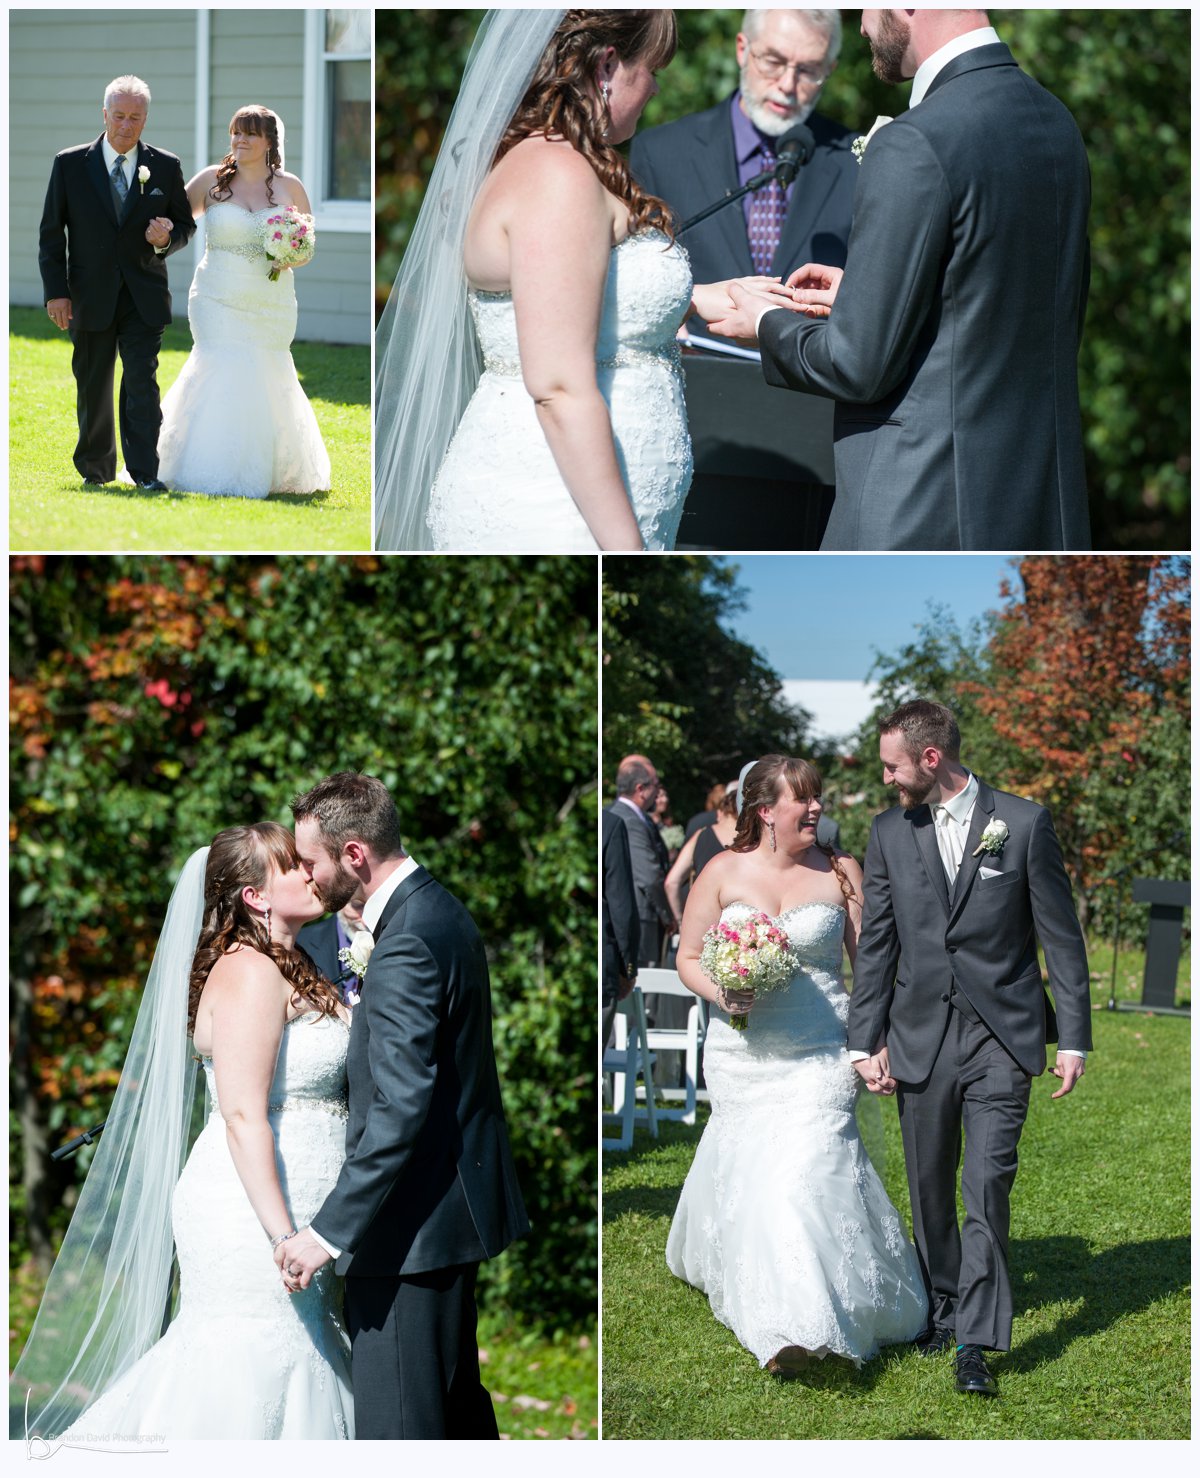 Ingersoll Wedding Photographer - The Ceremony